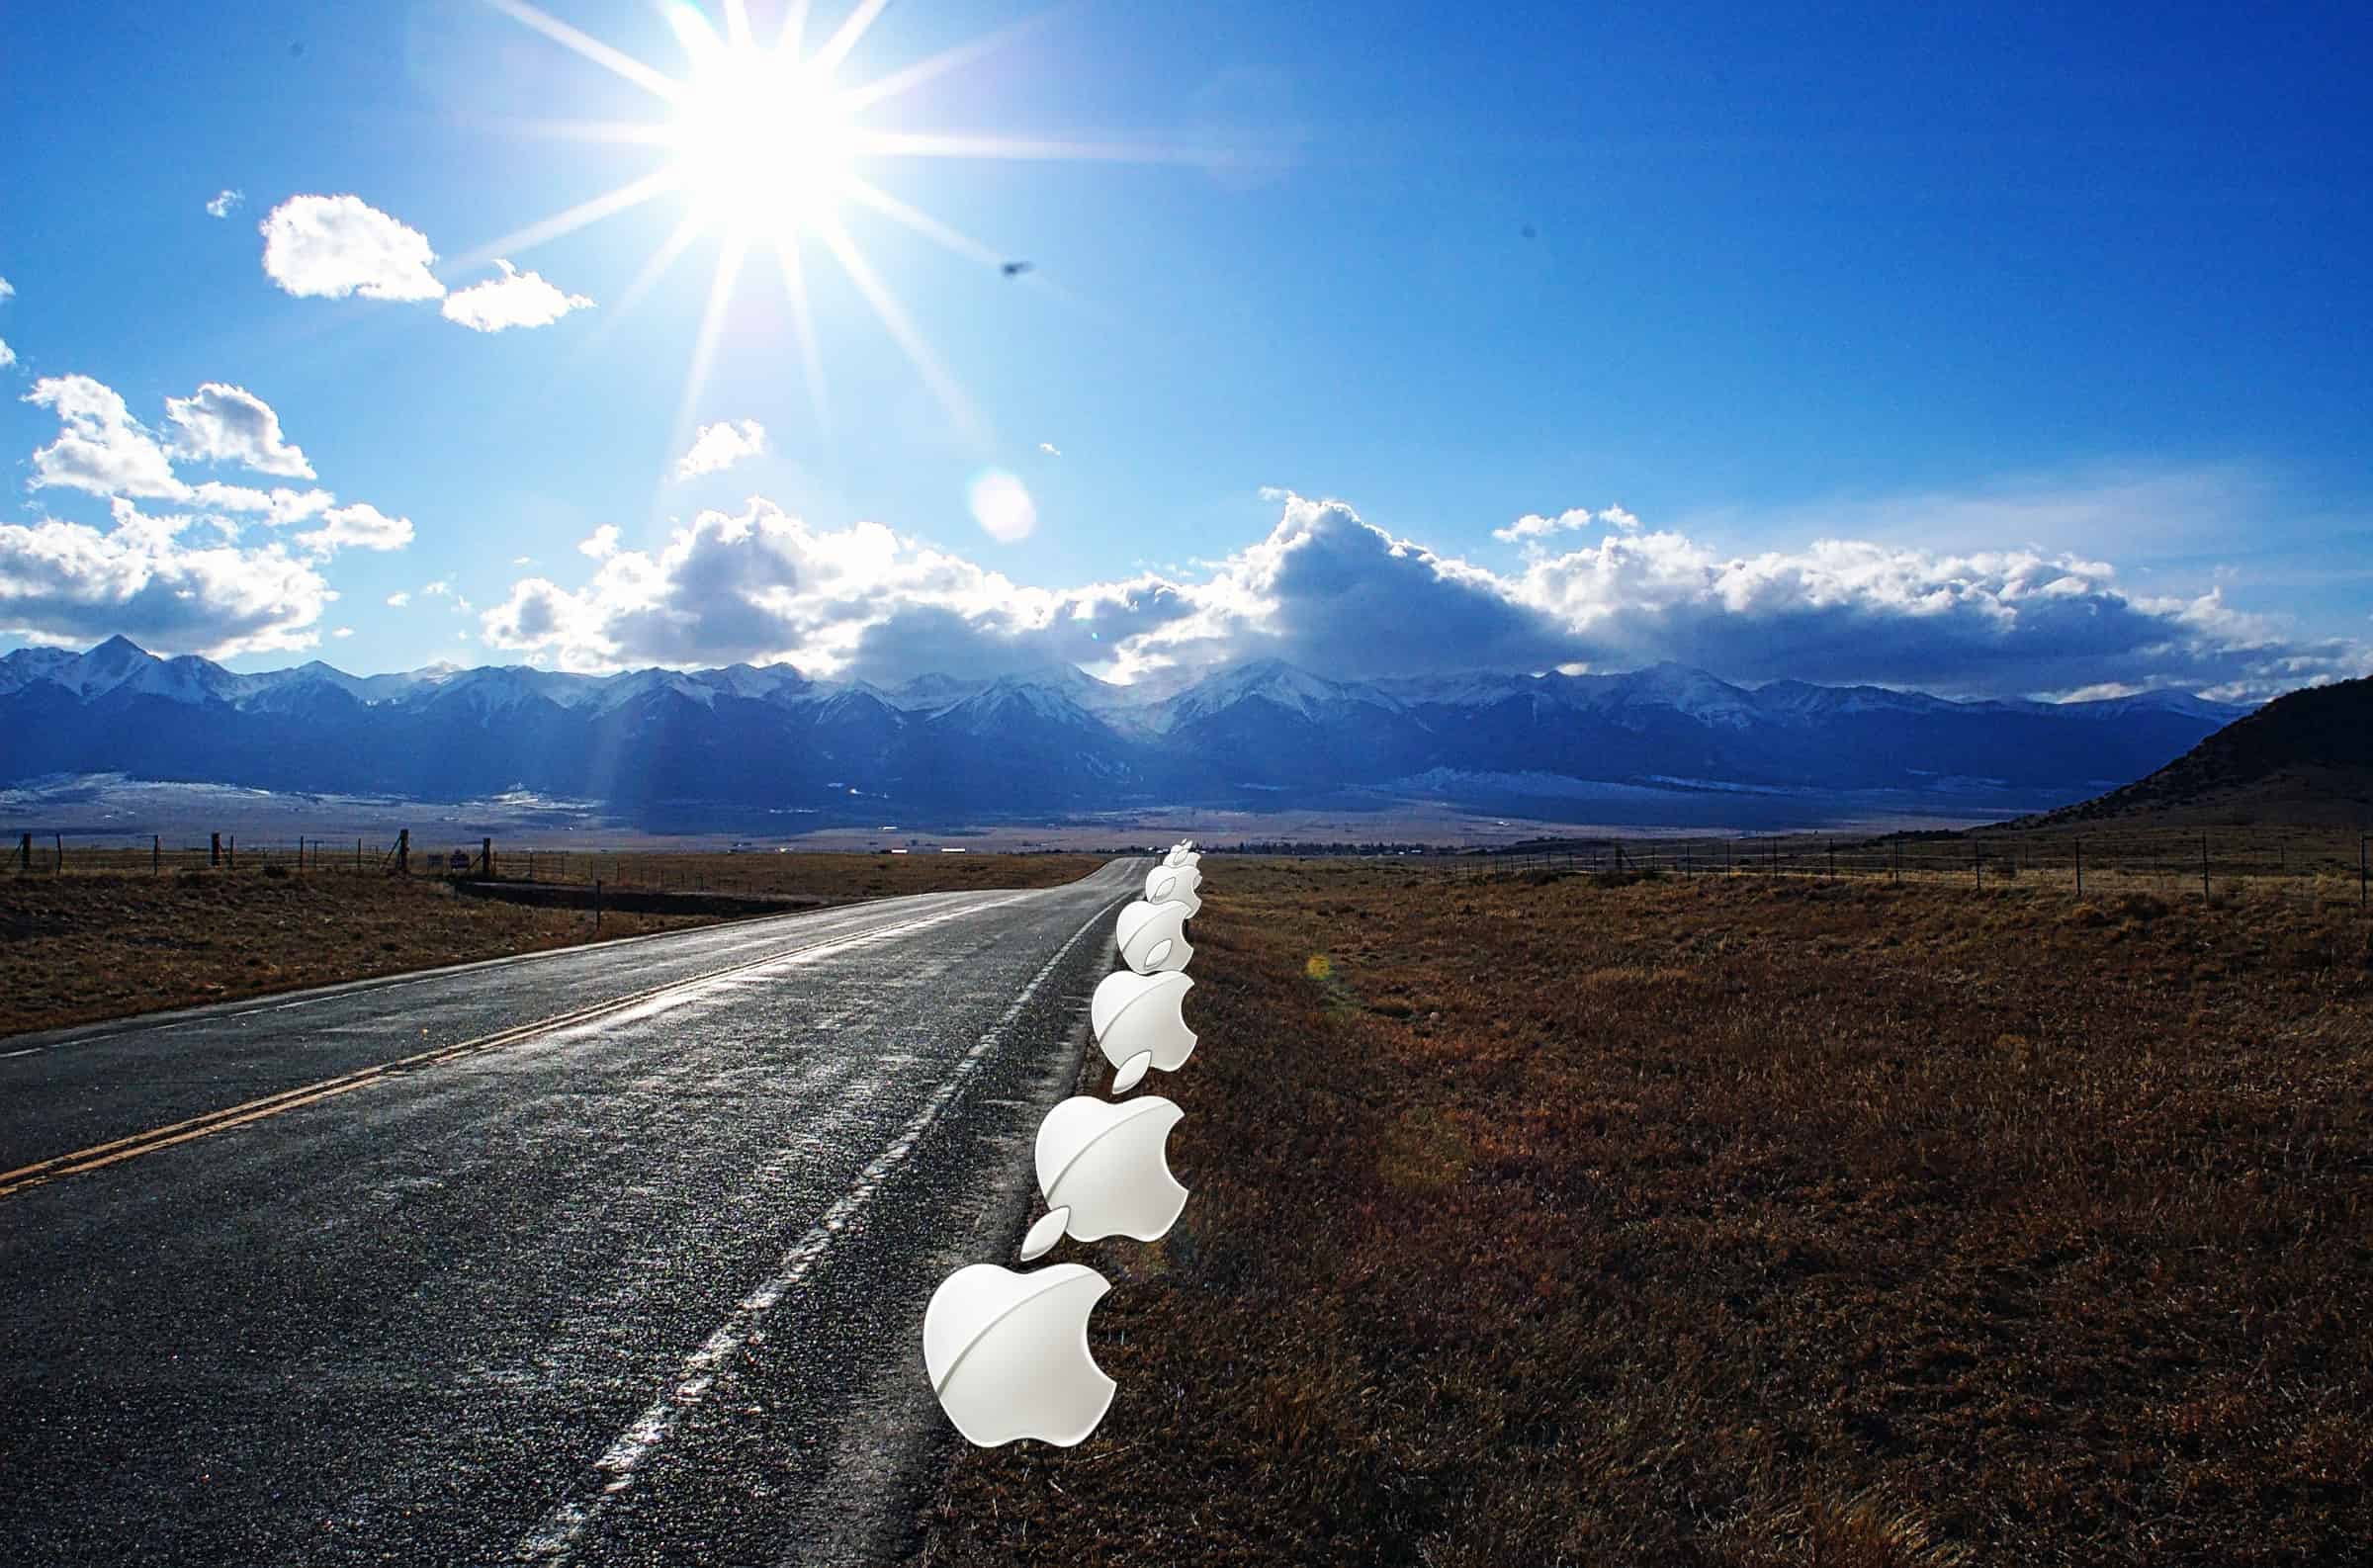 The Apple AR Road